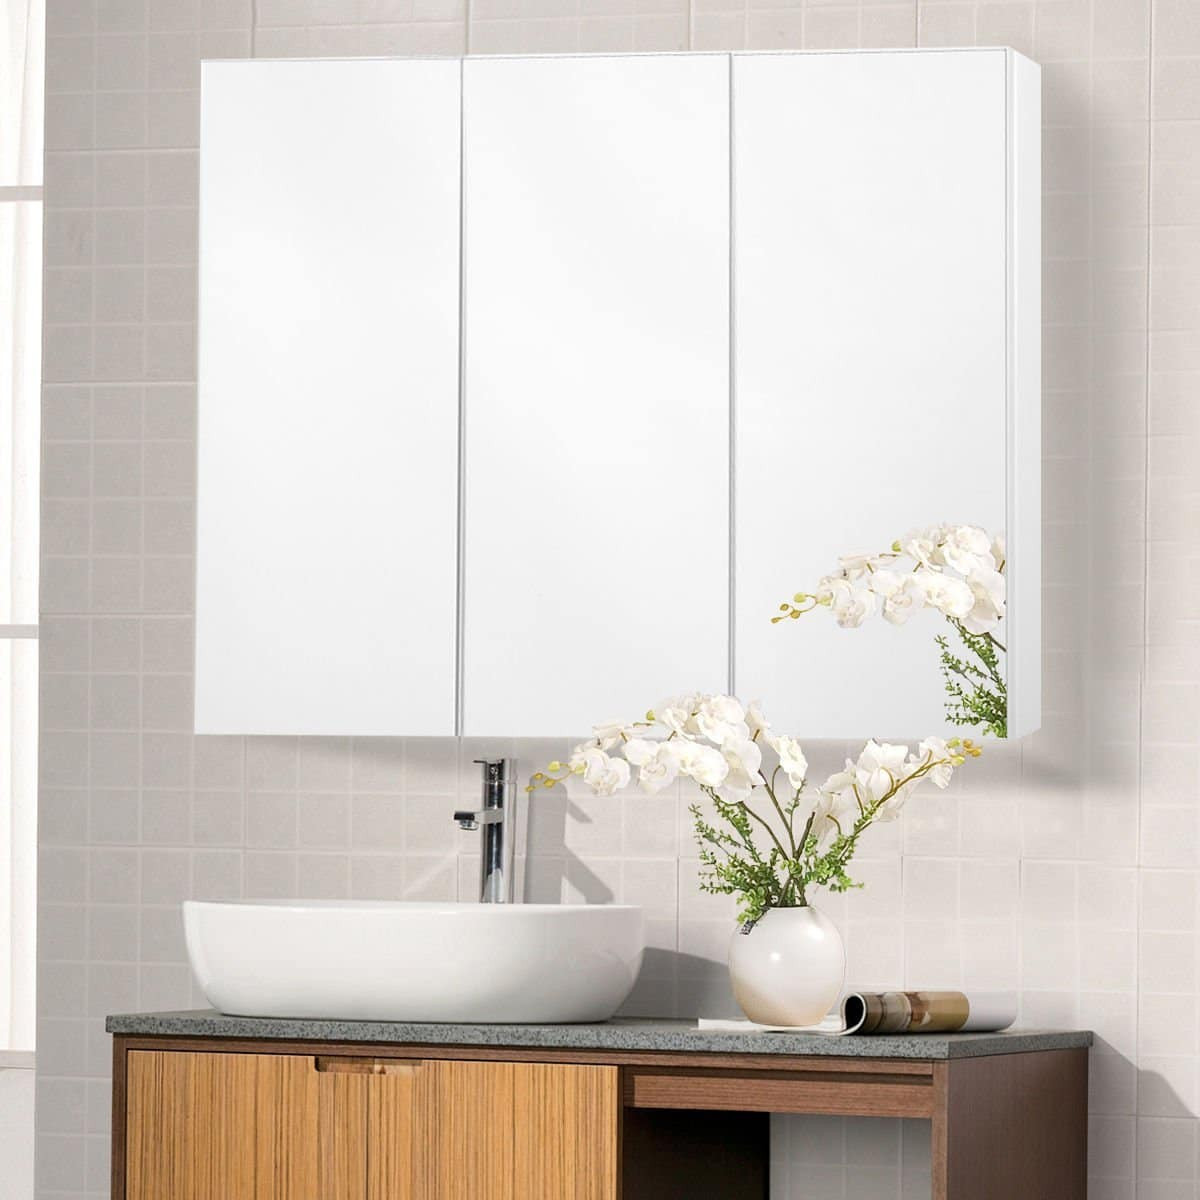 Mirror Bathroom Cabinet
 Top 10 Best Mirror Medicine Cabinets in 2019